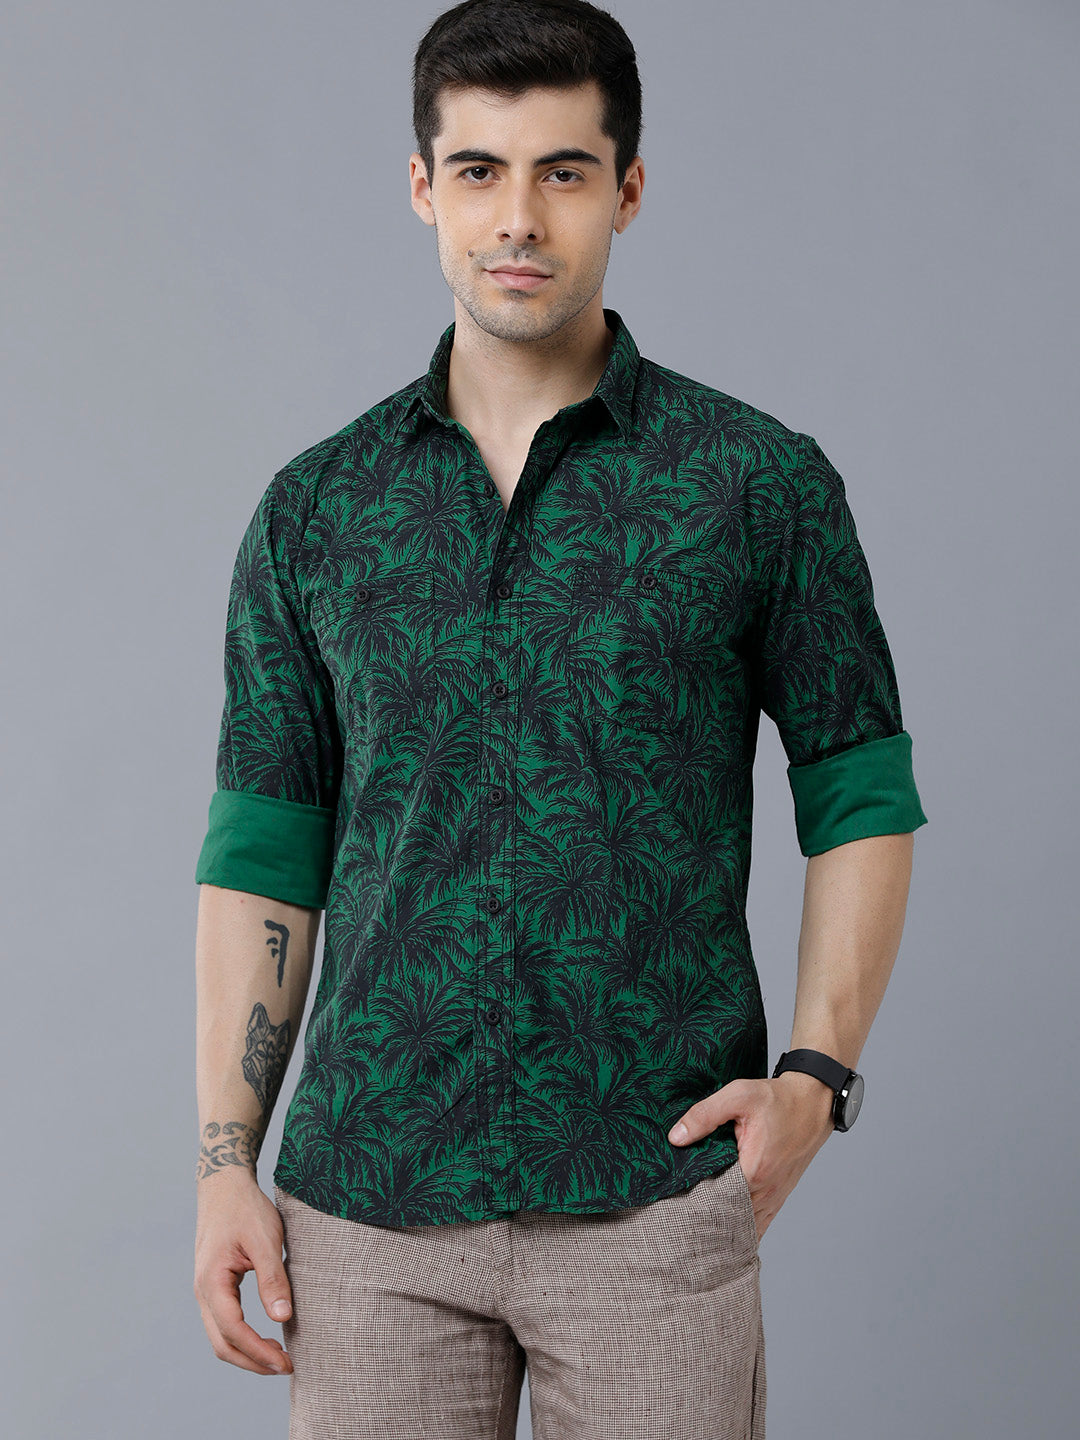 Tropical print shirt